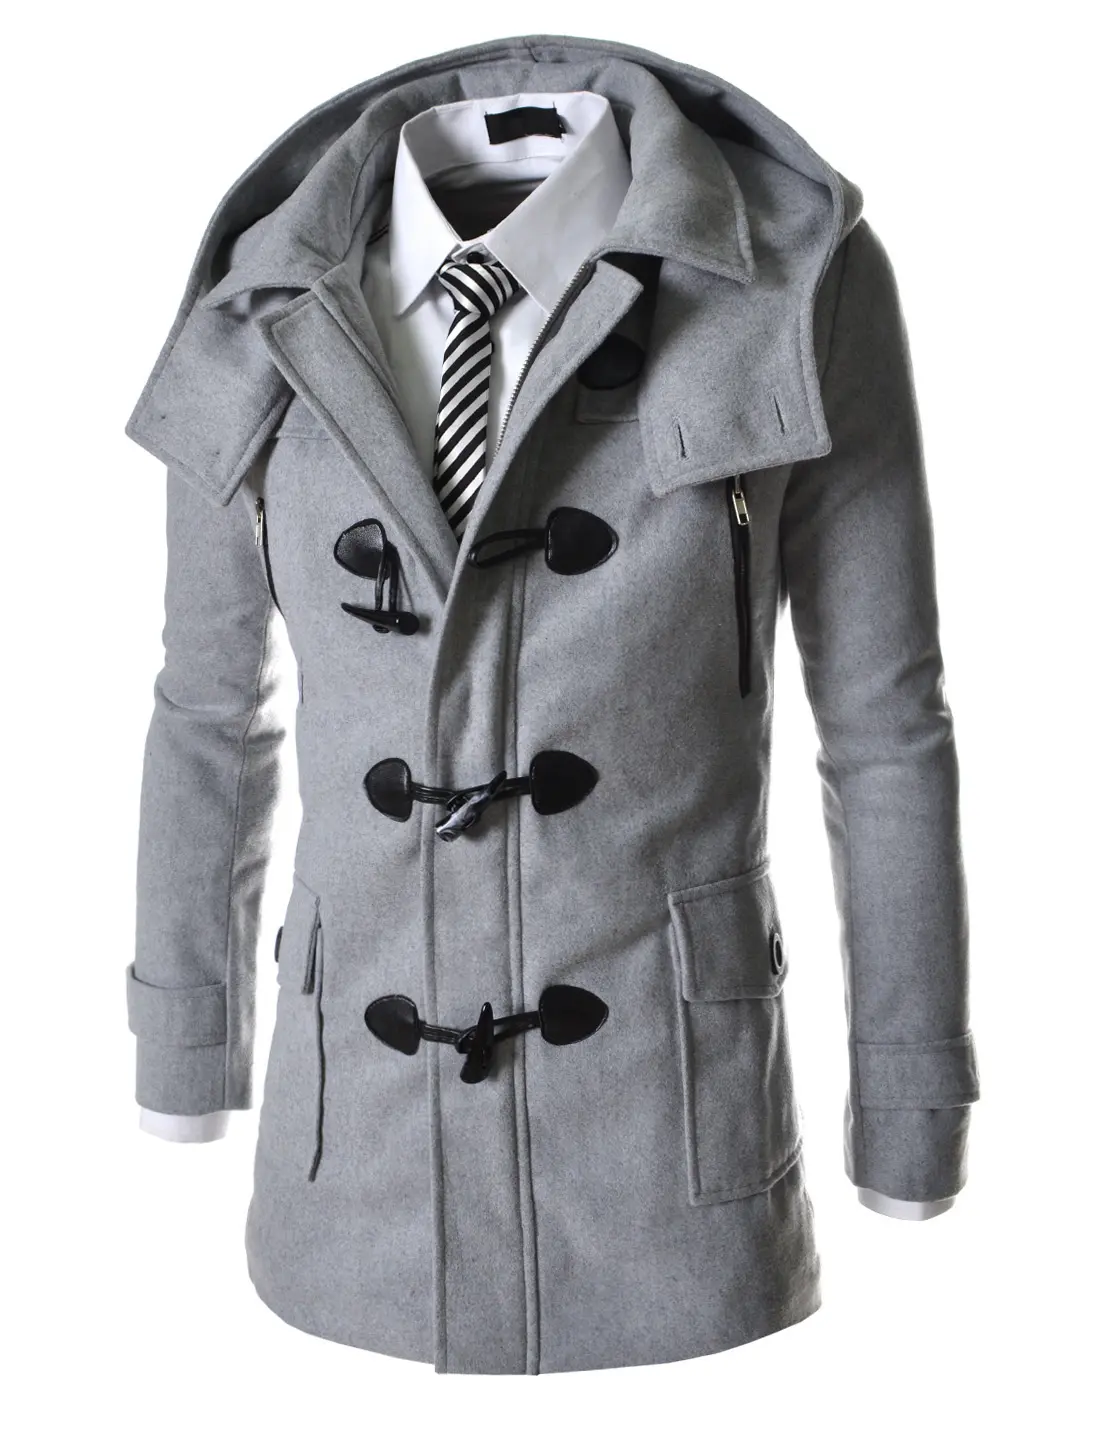 New Autumn Winter Wool Men's Coat Warm Slim Stylish Coat Warm wool coat fashion greatcoat grey color